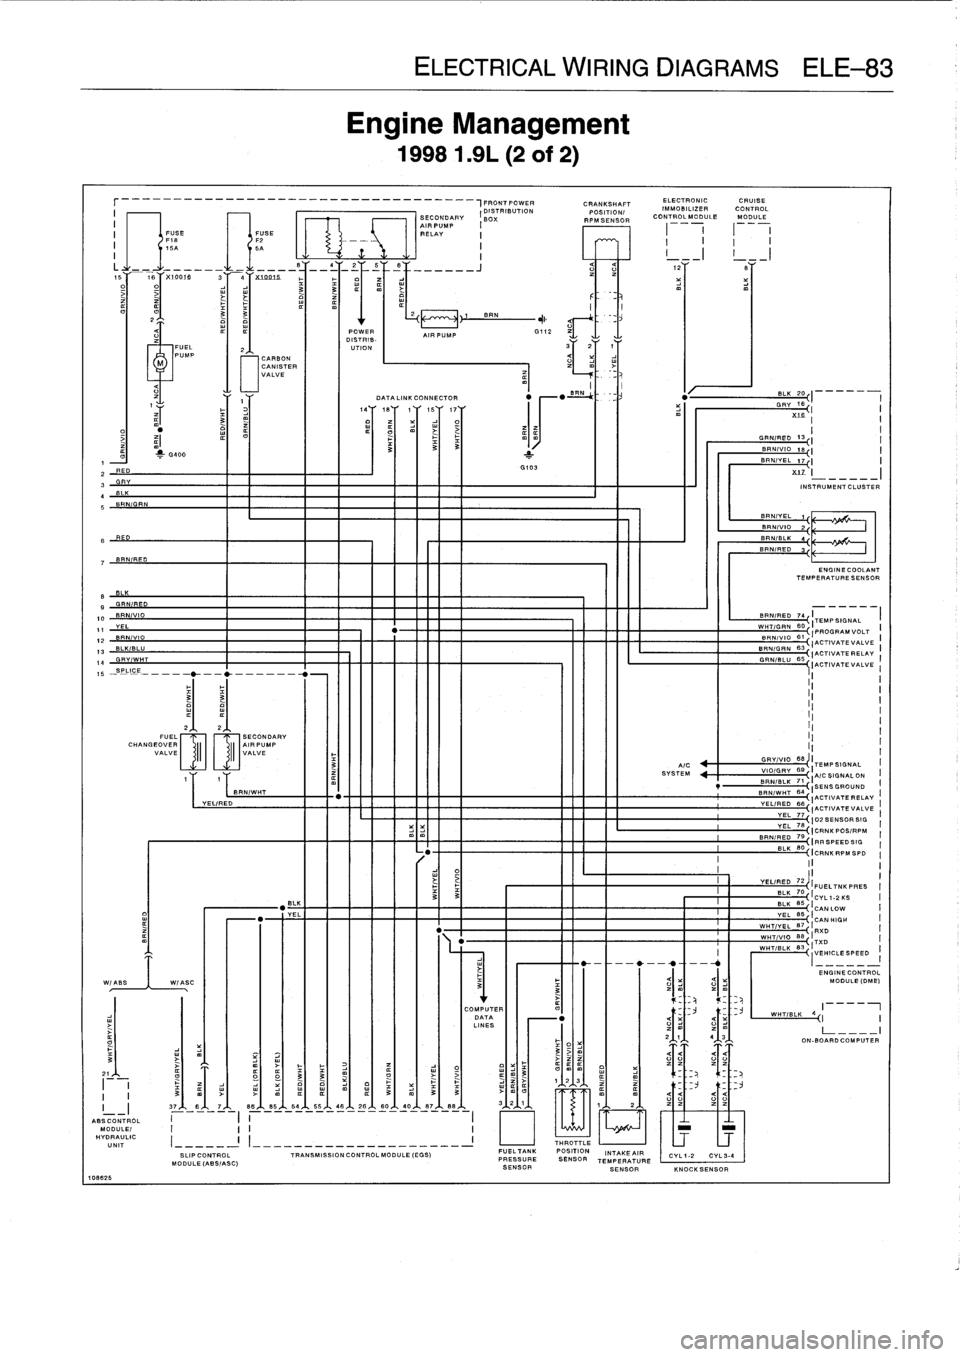 BMW 323i 1993 E36 Manual PDF 
10862
6

r_-_---_________________________-_--I
FRONT
POWER
CRANKSHAFT
IMM
OBILIZE
R

	

CONTROL
(

	

^

	

(DISTRIBUTION
POSITION(
I

	

//
II

	

SECONDASECONDARY
I
Box

	

_RPMSENSOR
OONTROLMODULE